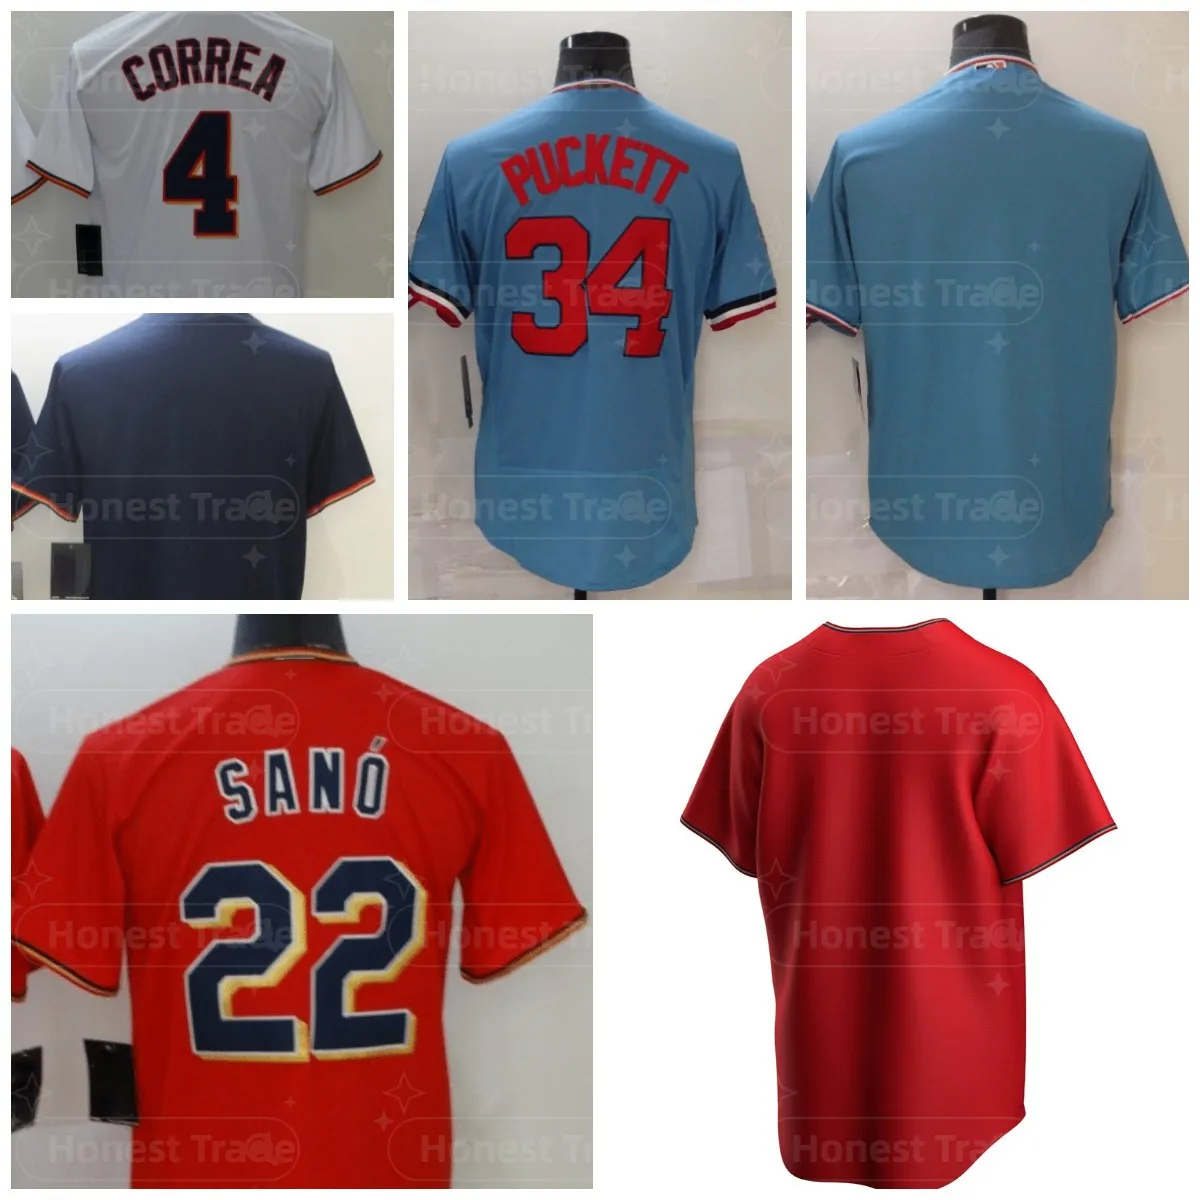 34 Kirby Puckett 남자 야구 저지 블루 22 Miguel Sano Red Carlos 4 Correa Minn Blank Jersey 품질 자수 셔츠 티셔츠